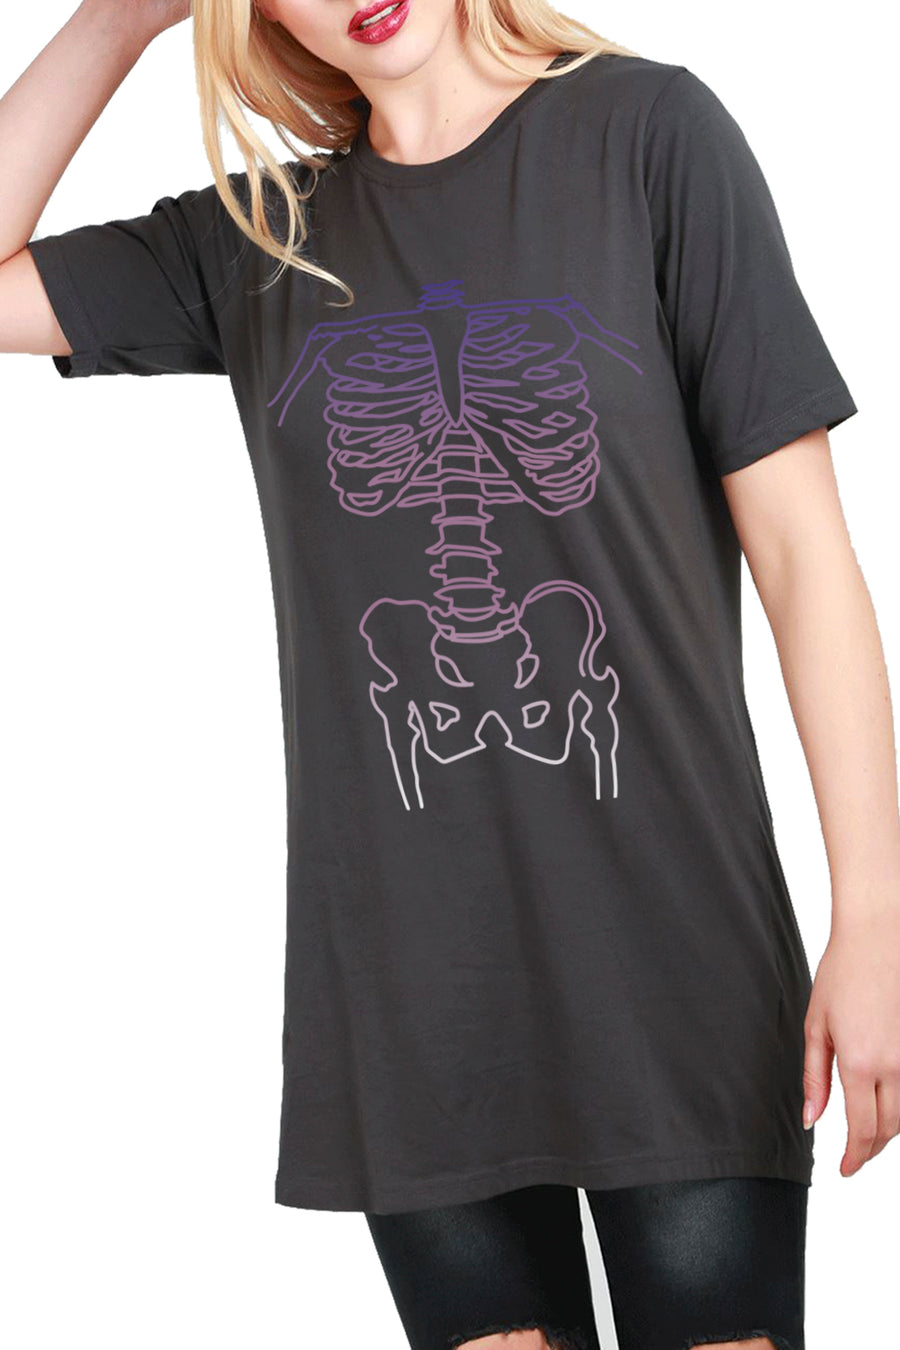 Clare X-Ray Skeleton Bone Tunic T Shirt Dress